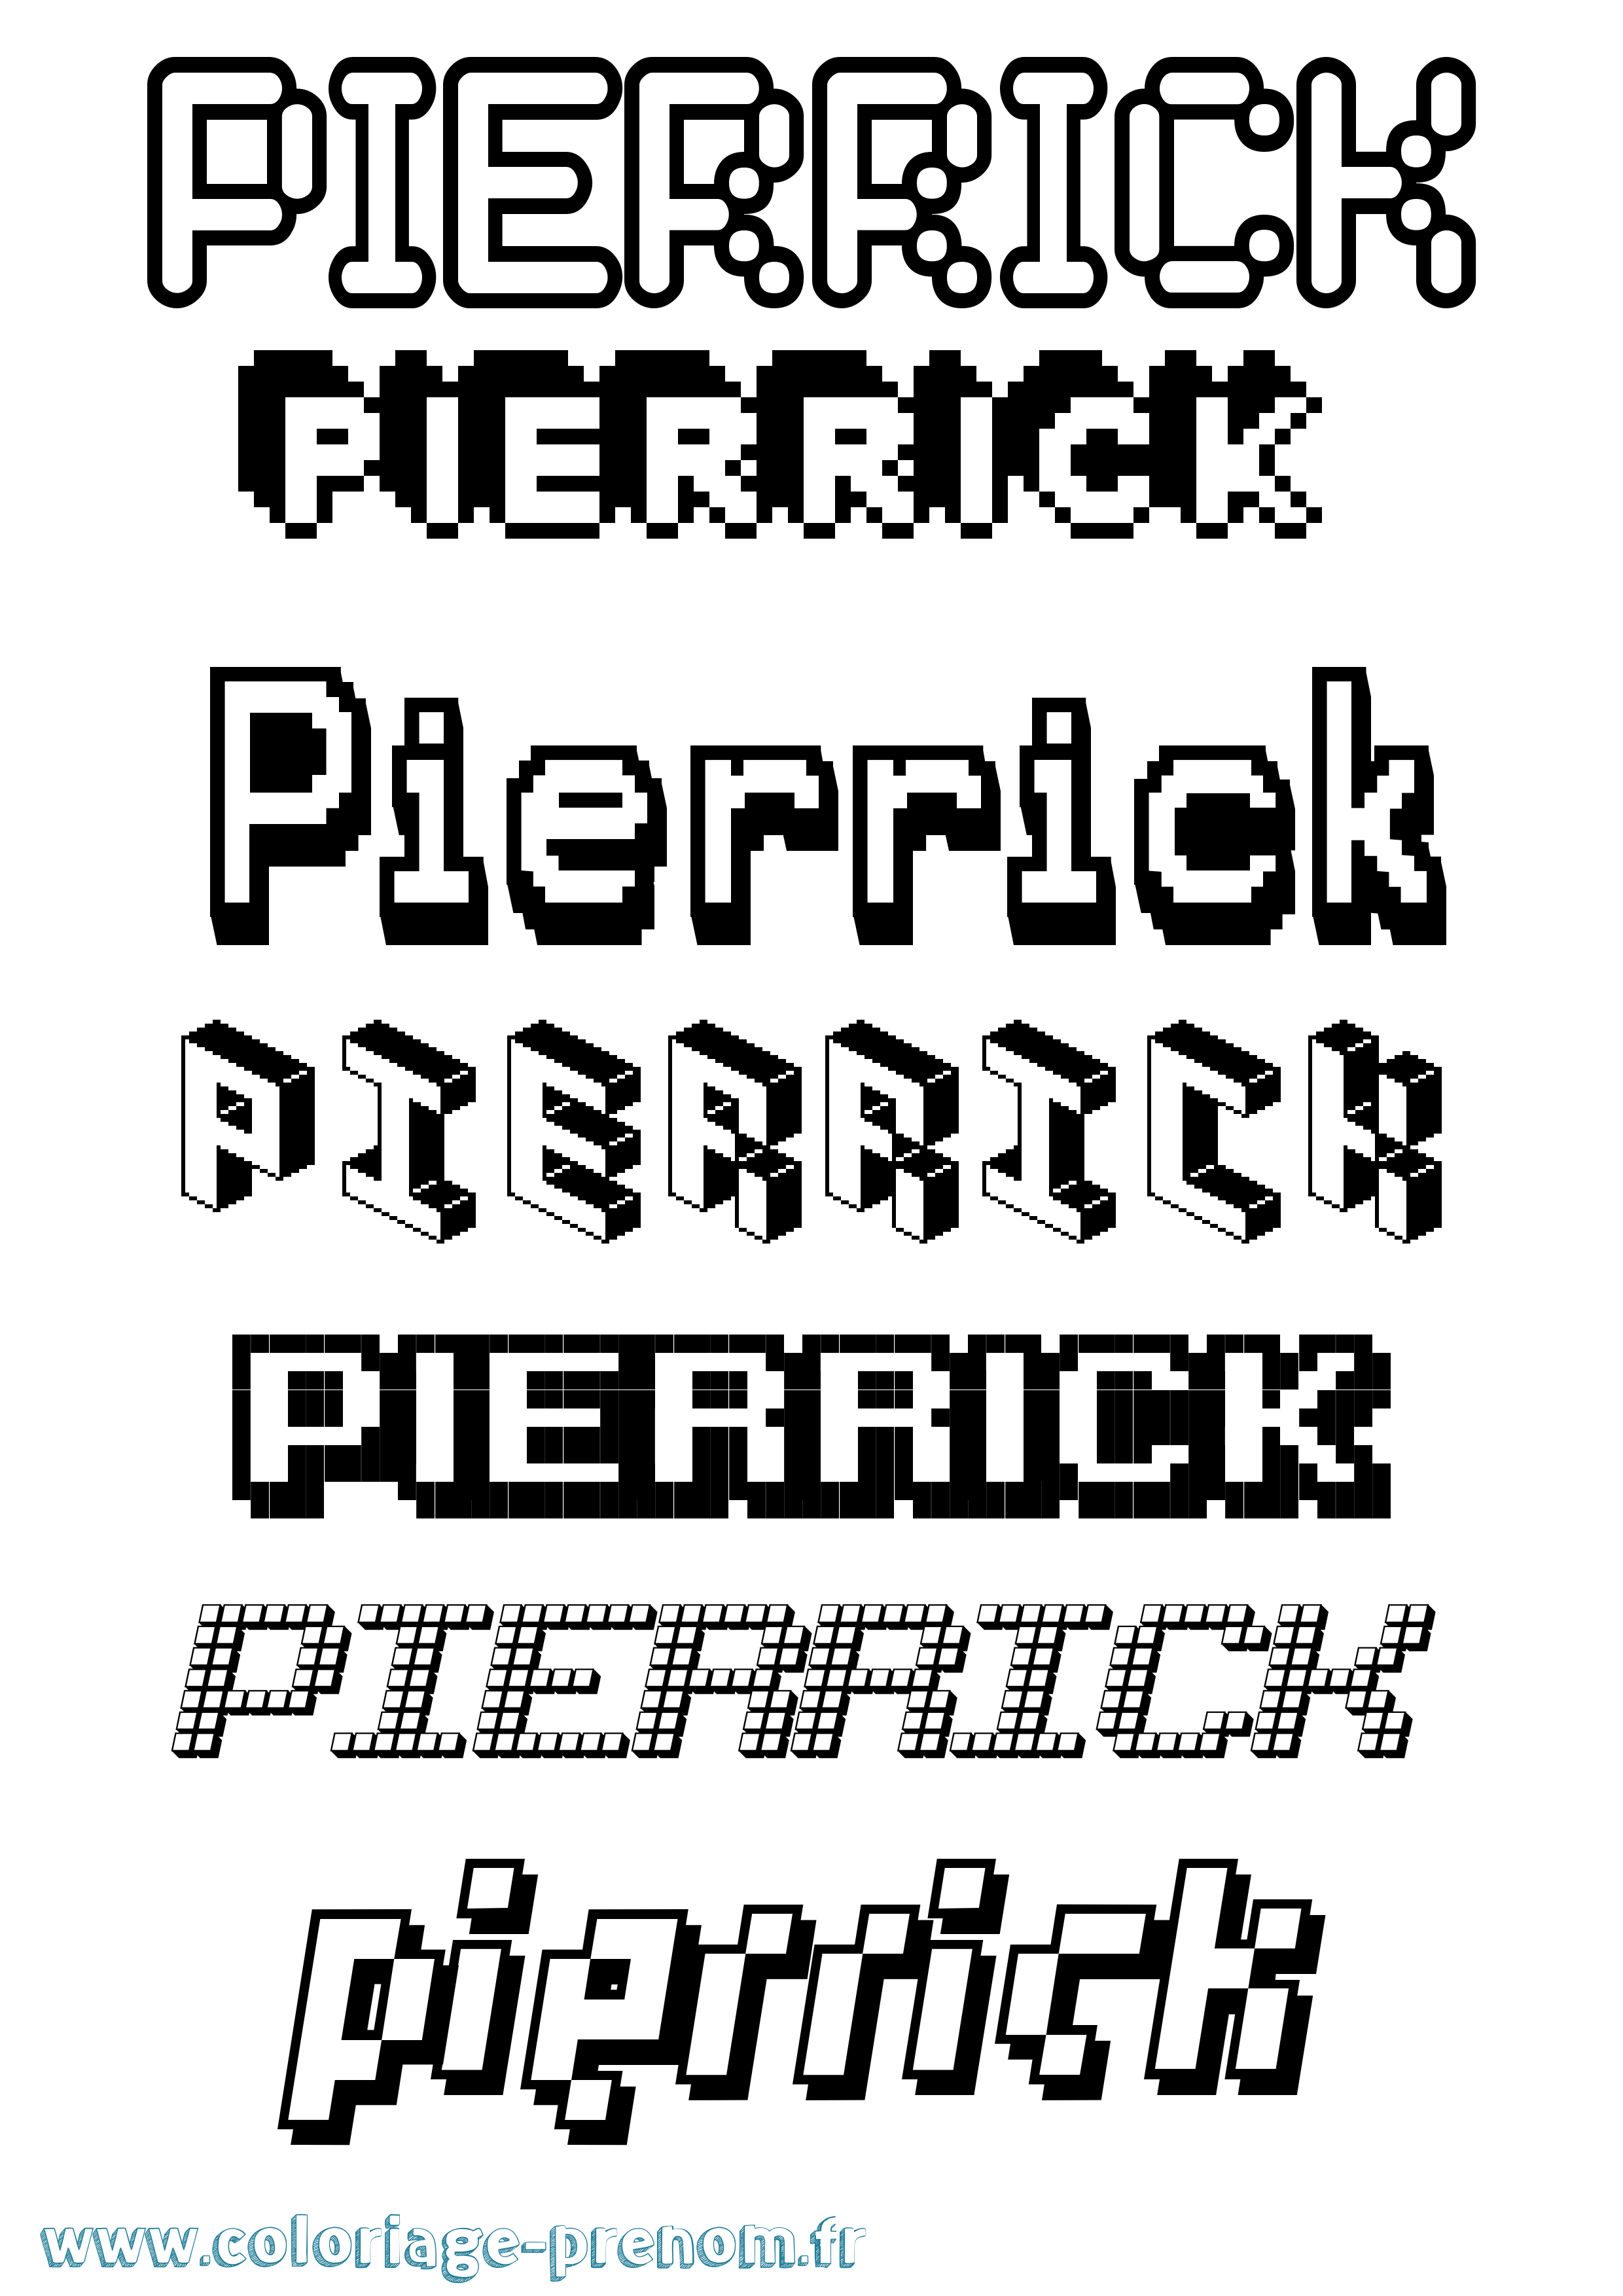 Coloriage prénom Pierrick Pixel